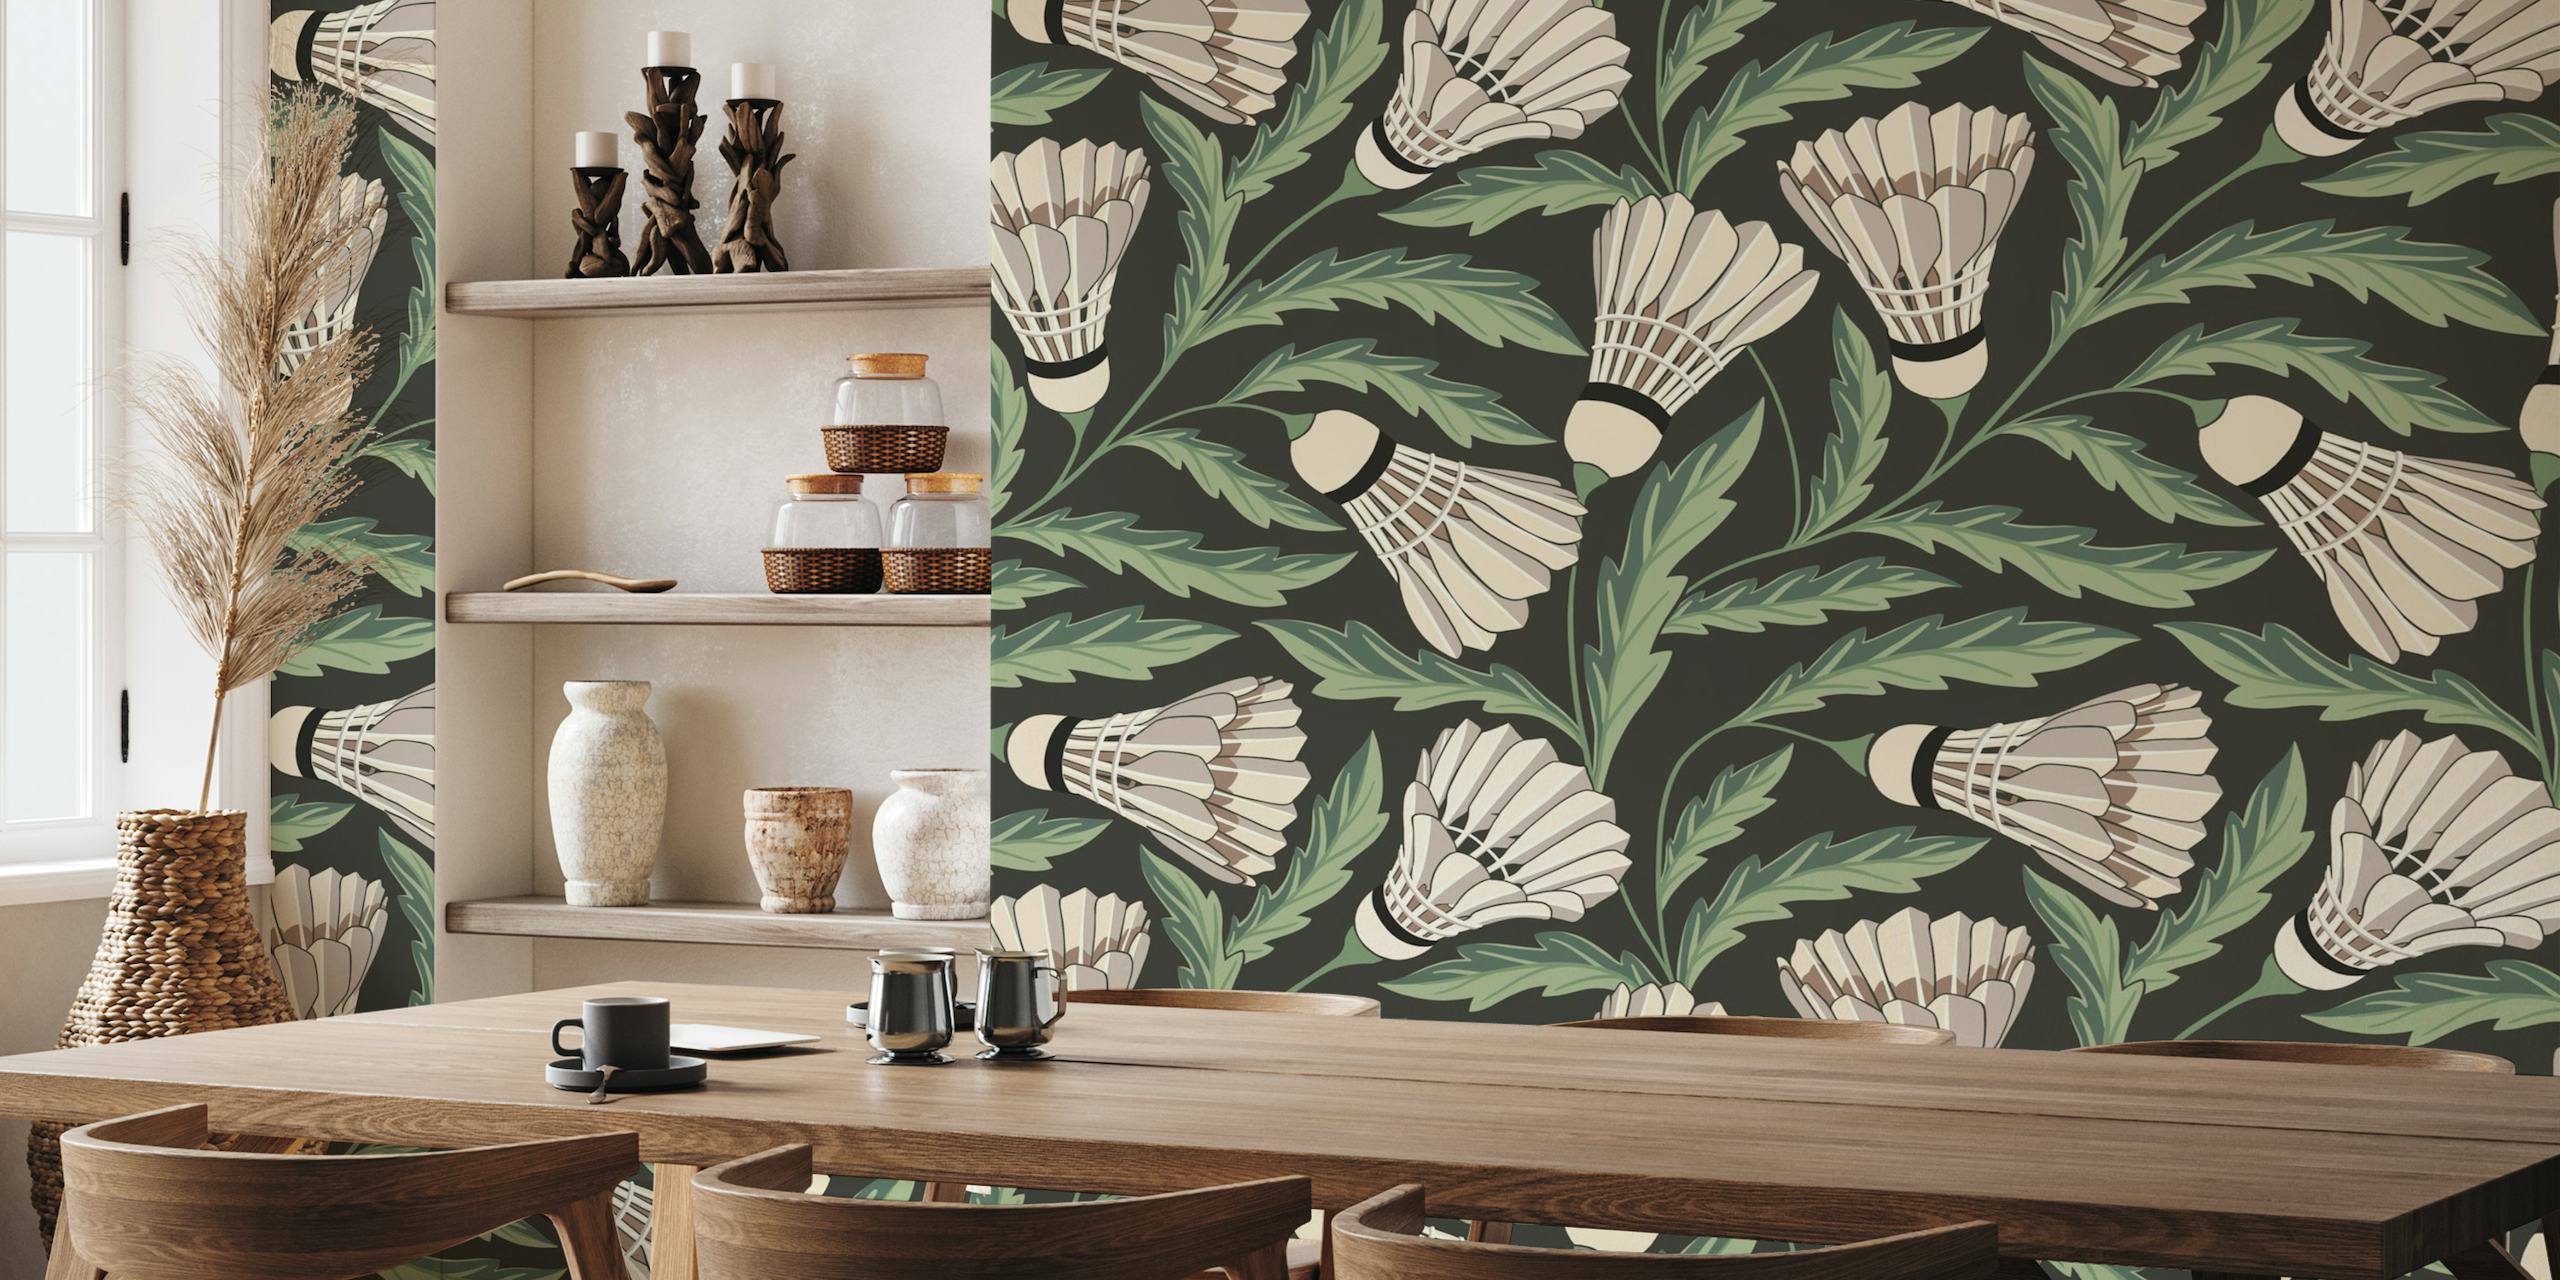 Whimsical badminton plants wallpaper